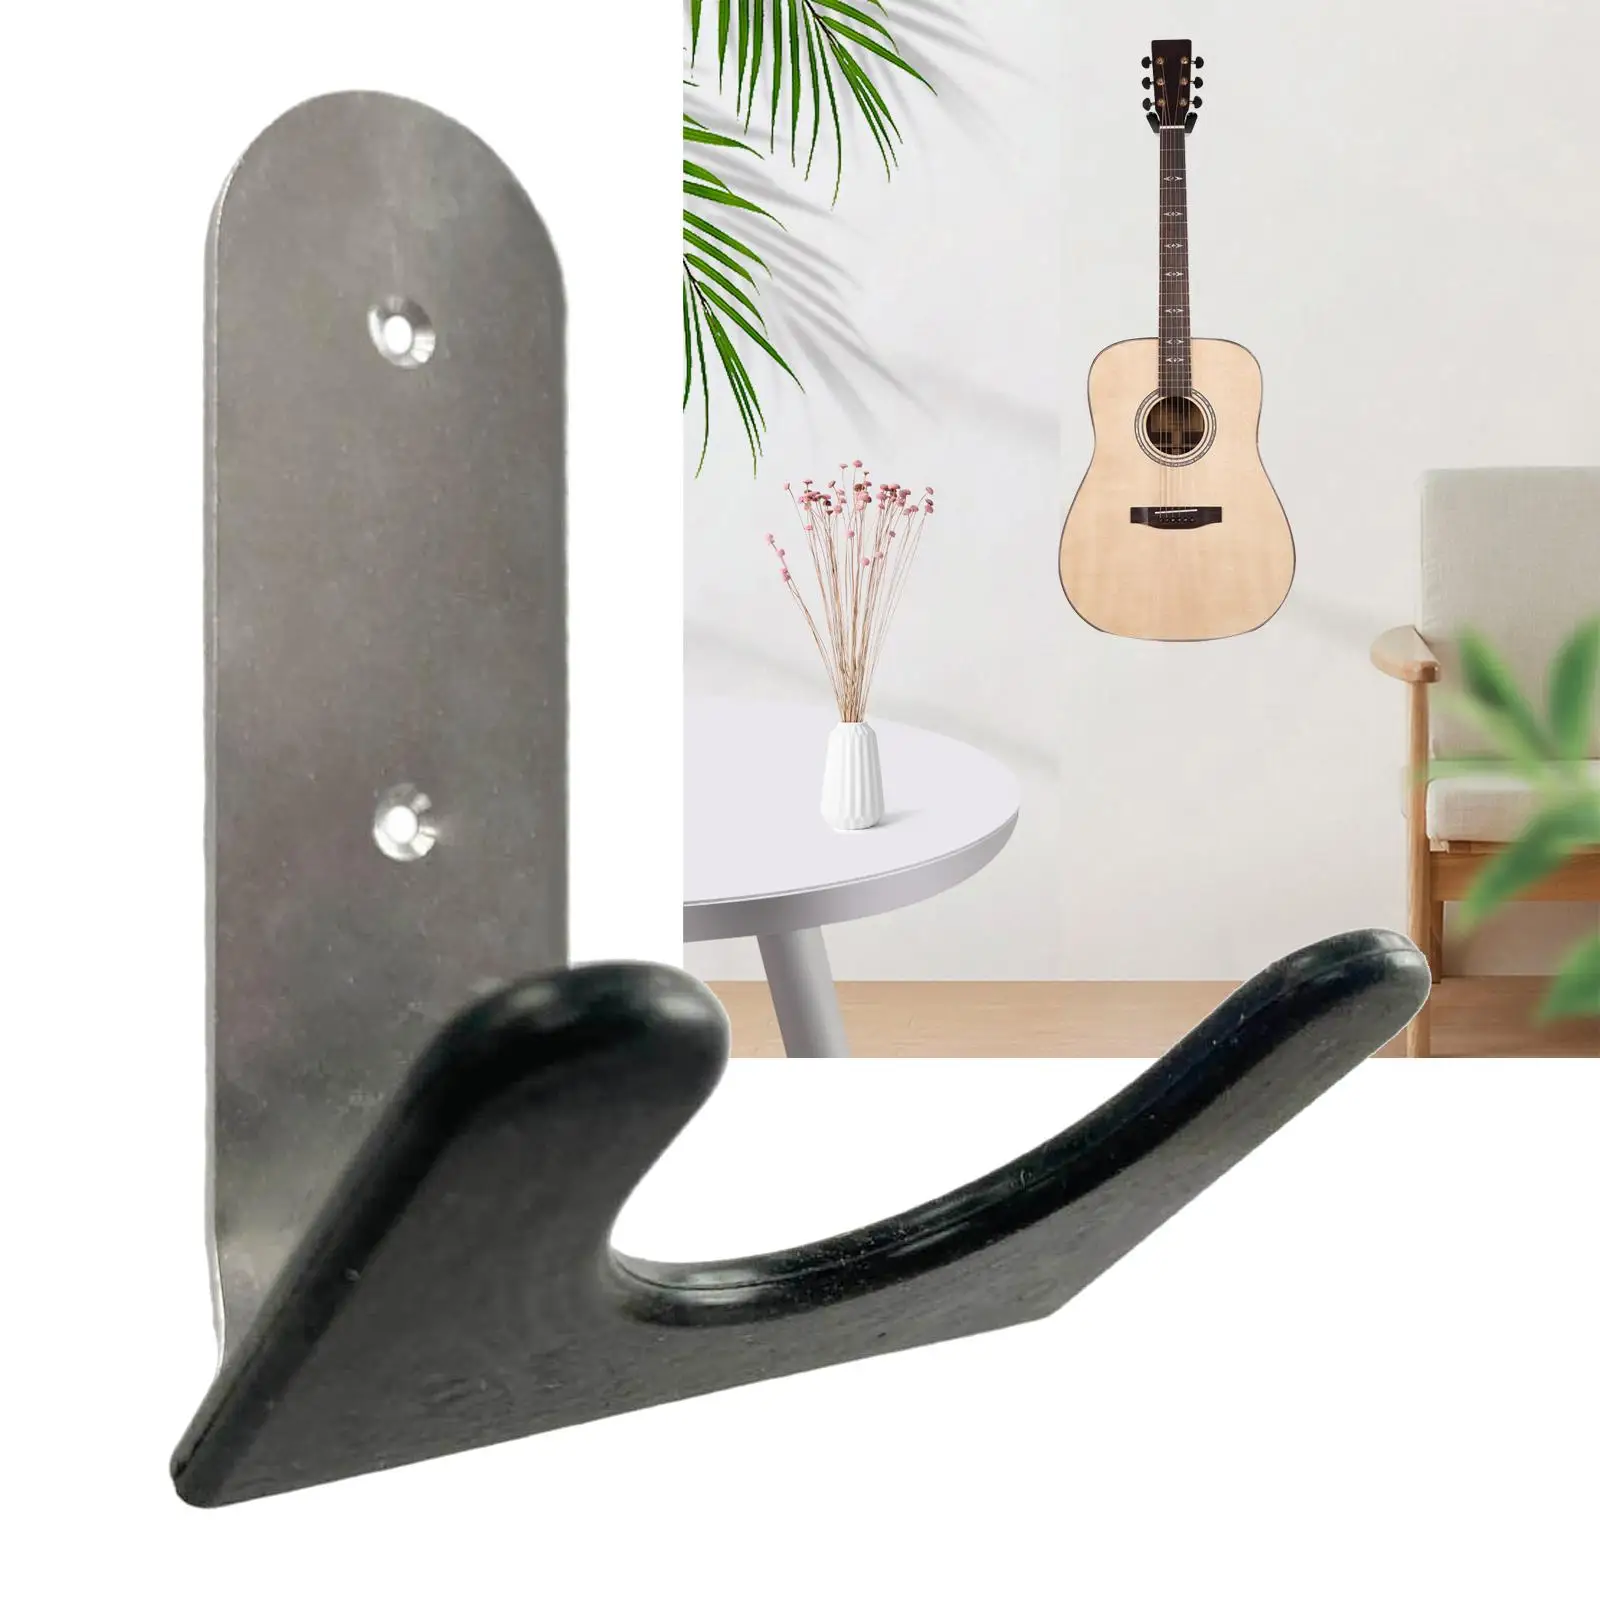 Guitar Wall Mount Holder Ukulele Stand Guitar Holder Hook for Banjo Acoustic/Electric/Classic Guitar Bass Musical Instruments